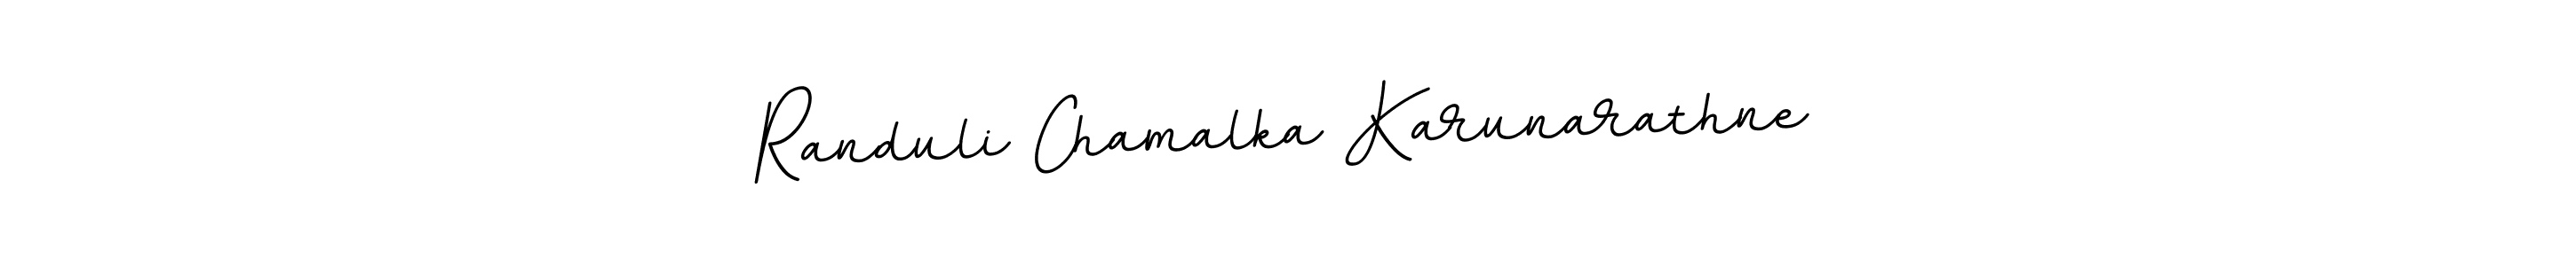 Make a beautiful signature design for name Randuli Chamalka Karunarathne. With this signature (BallpointsItalic-DORy9) style, you can create a handwritten signature for free. Randuli Chamalka Karunarathne signature style 11 images and pictures png